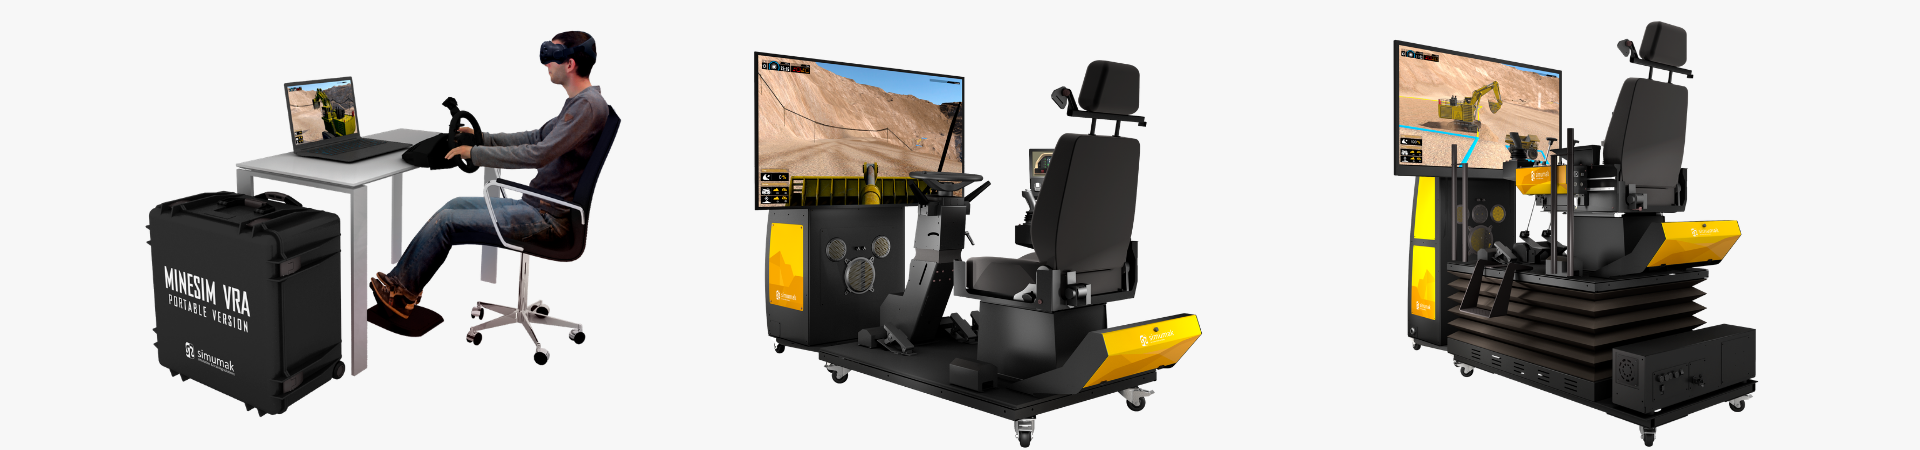 Mining simulator